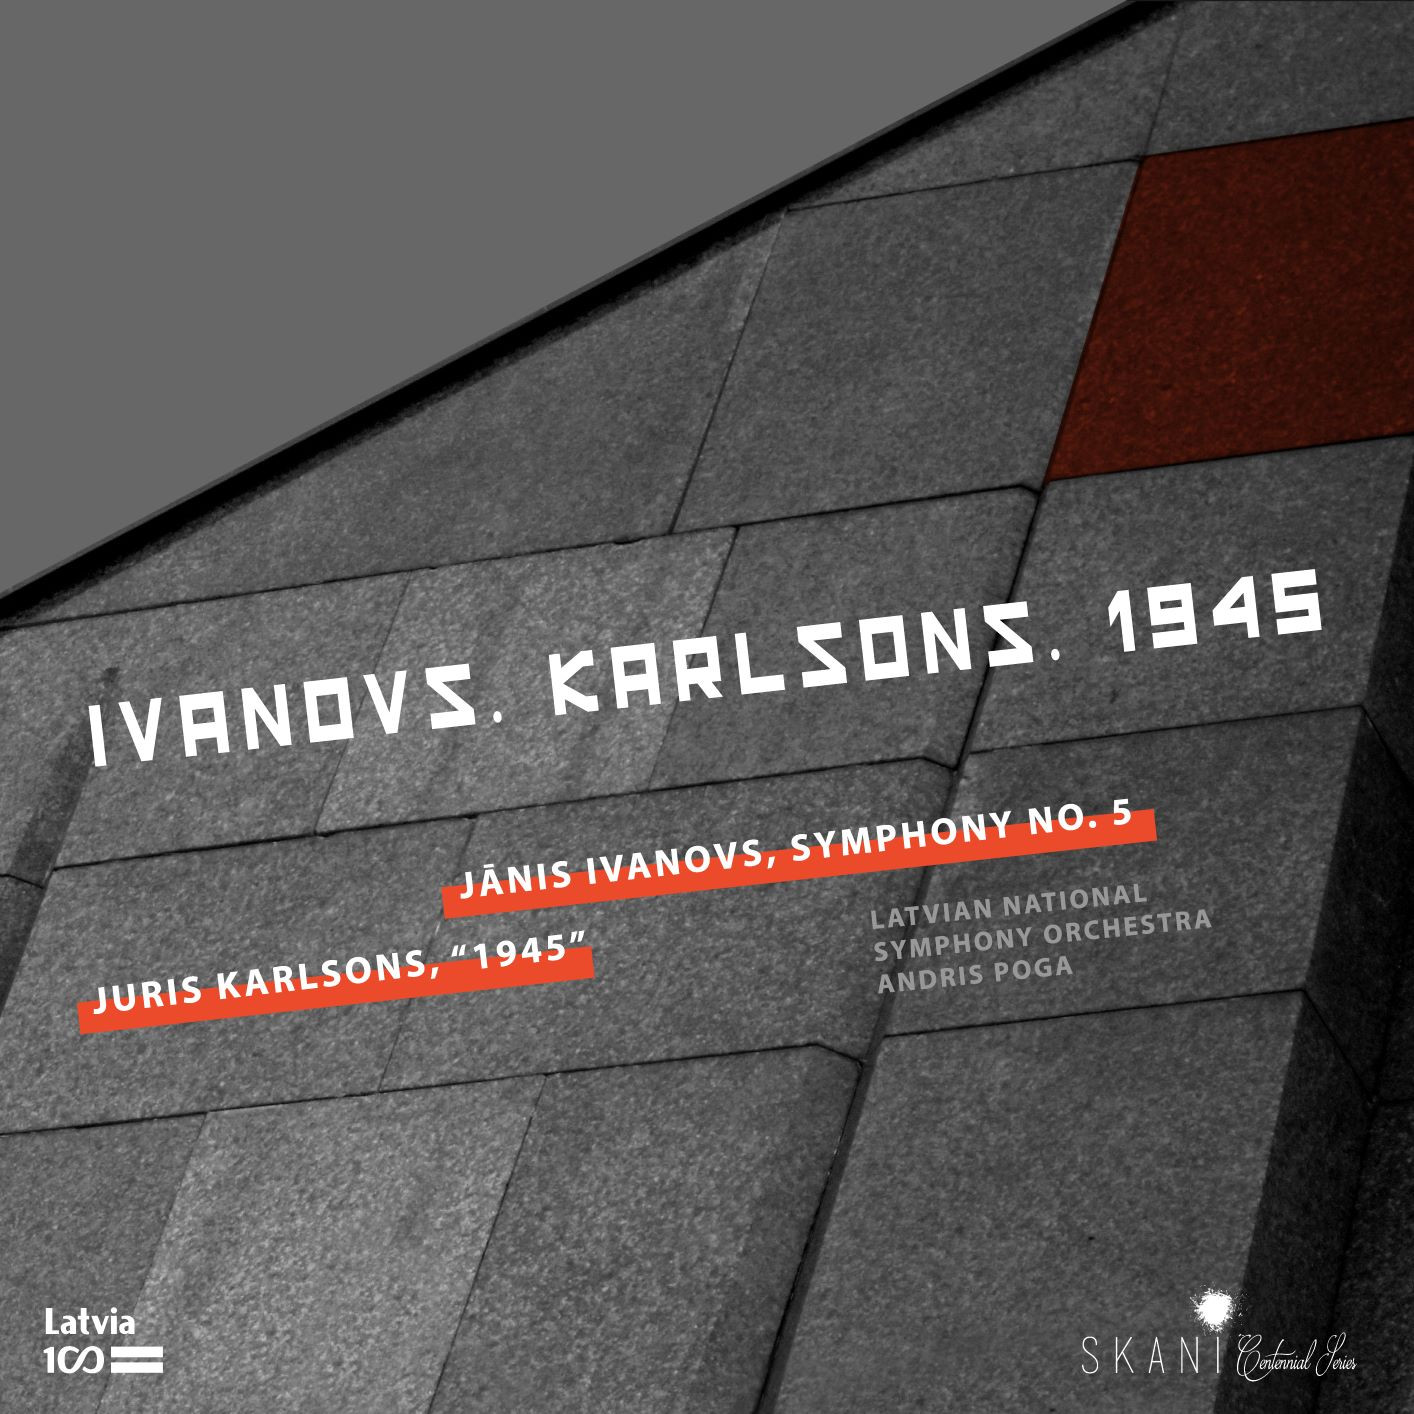 Ivanovs. Karlsons. 1945